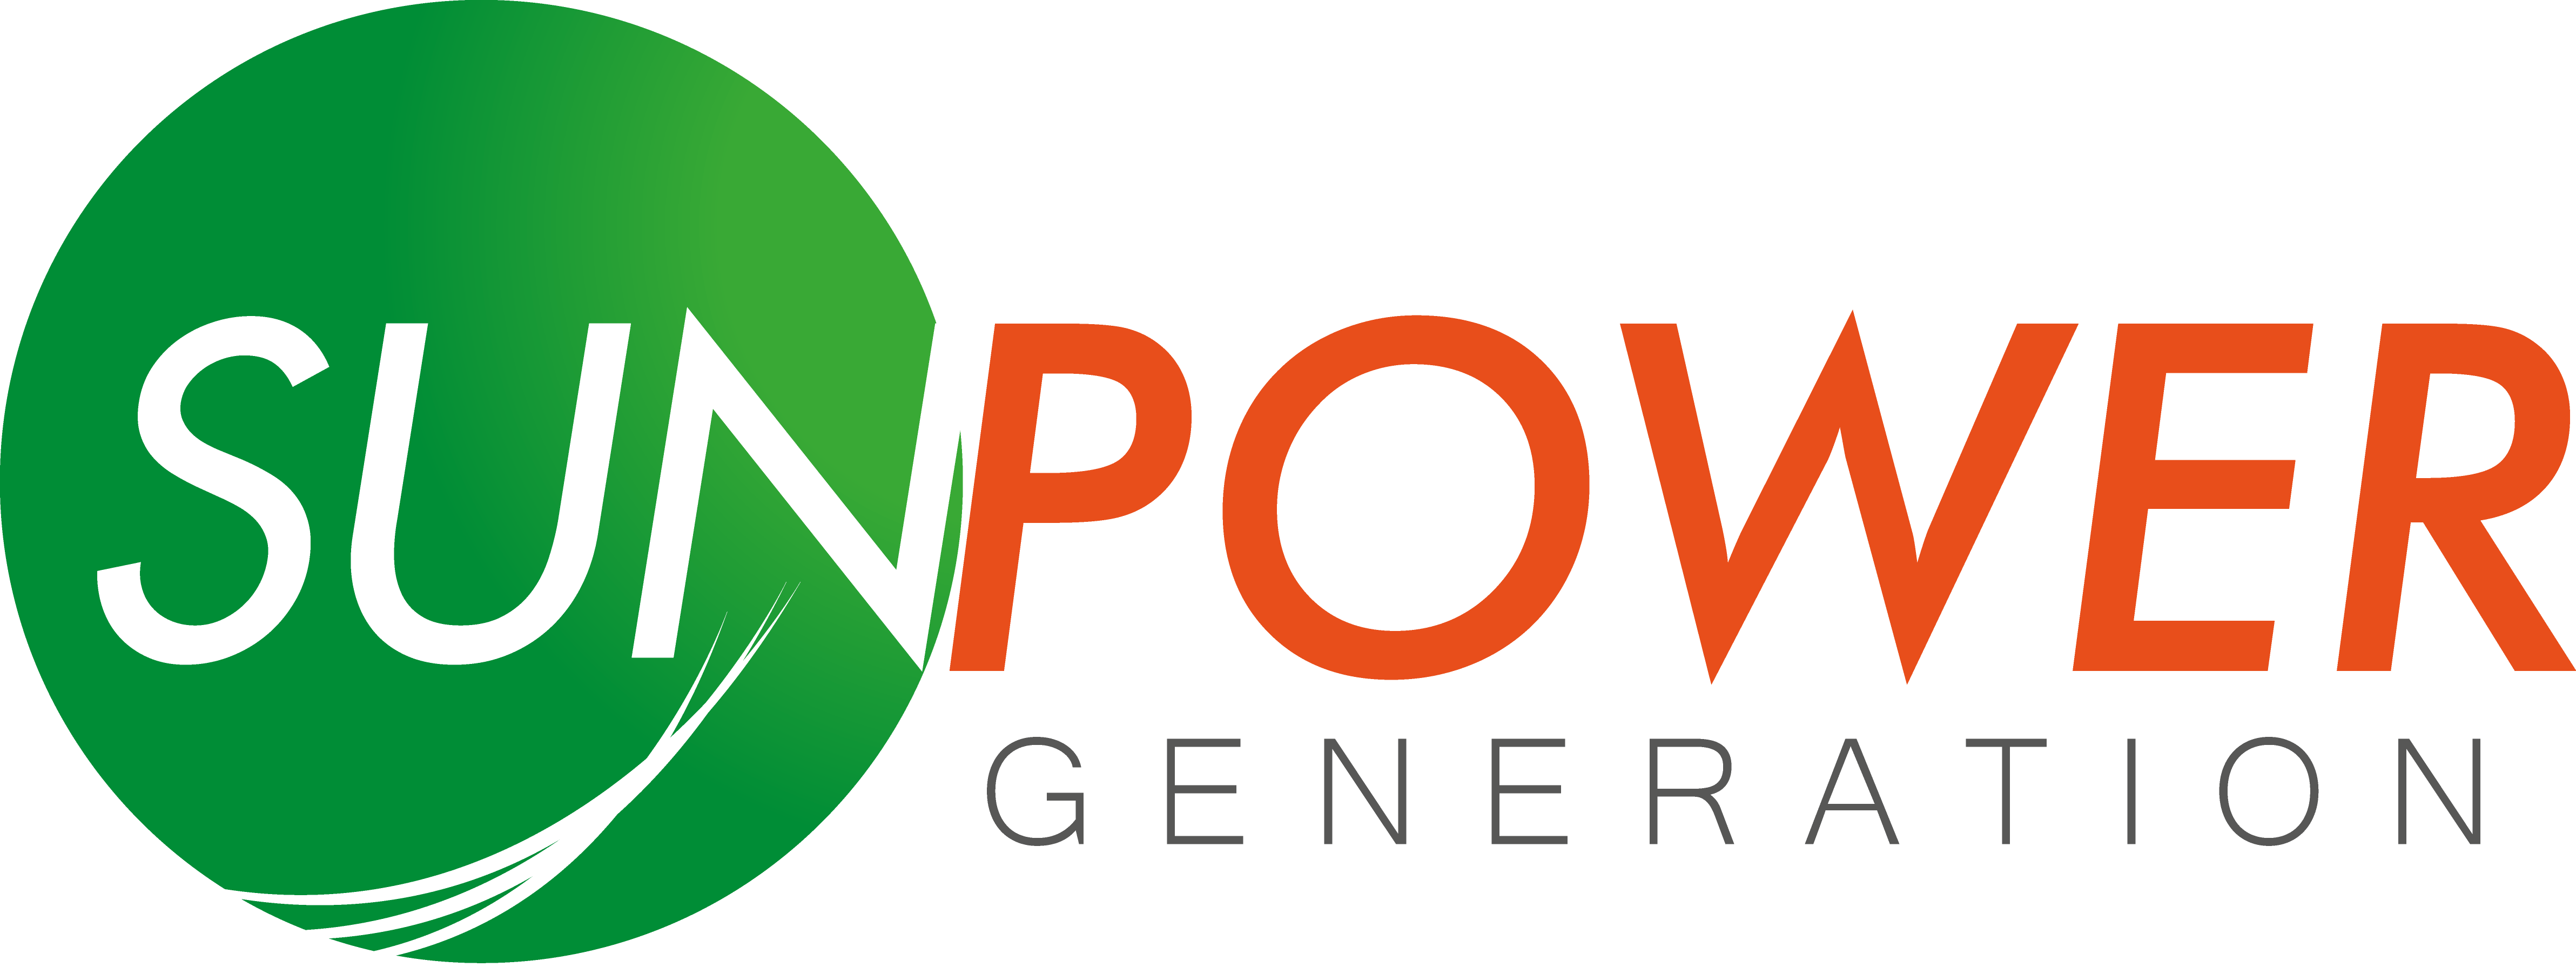 SunPower Logo - SunPower Generation Energy Equipment Distributor